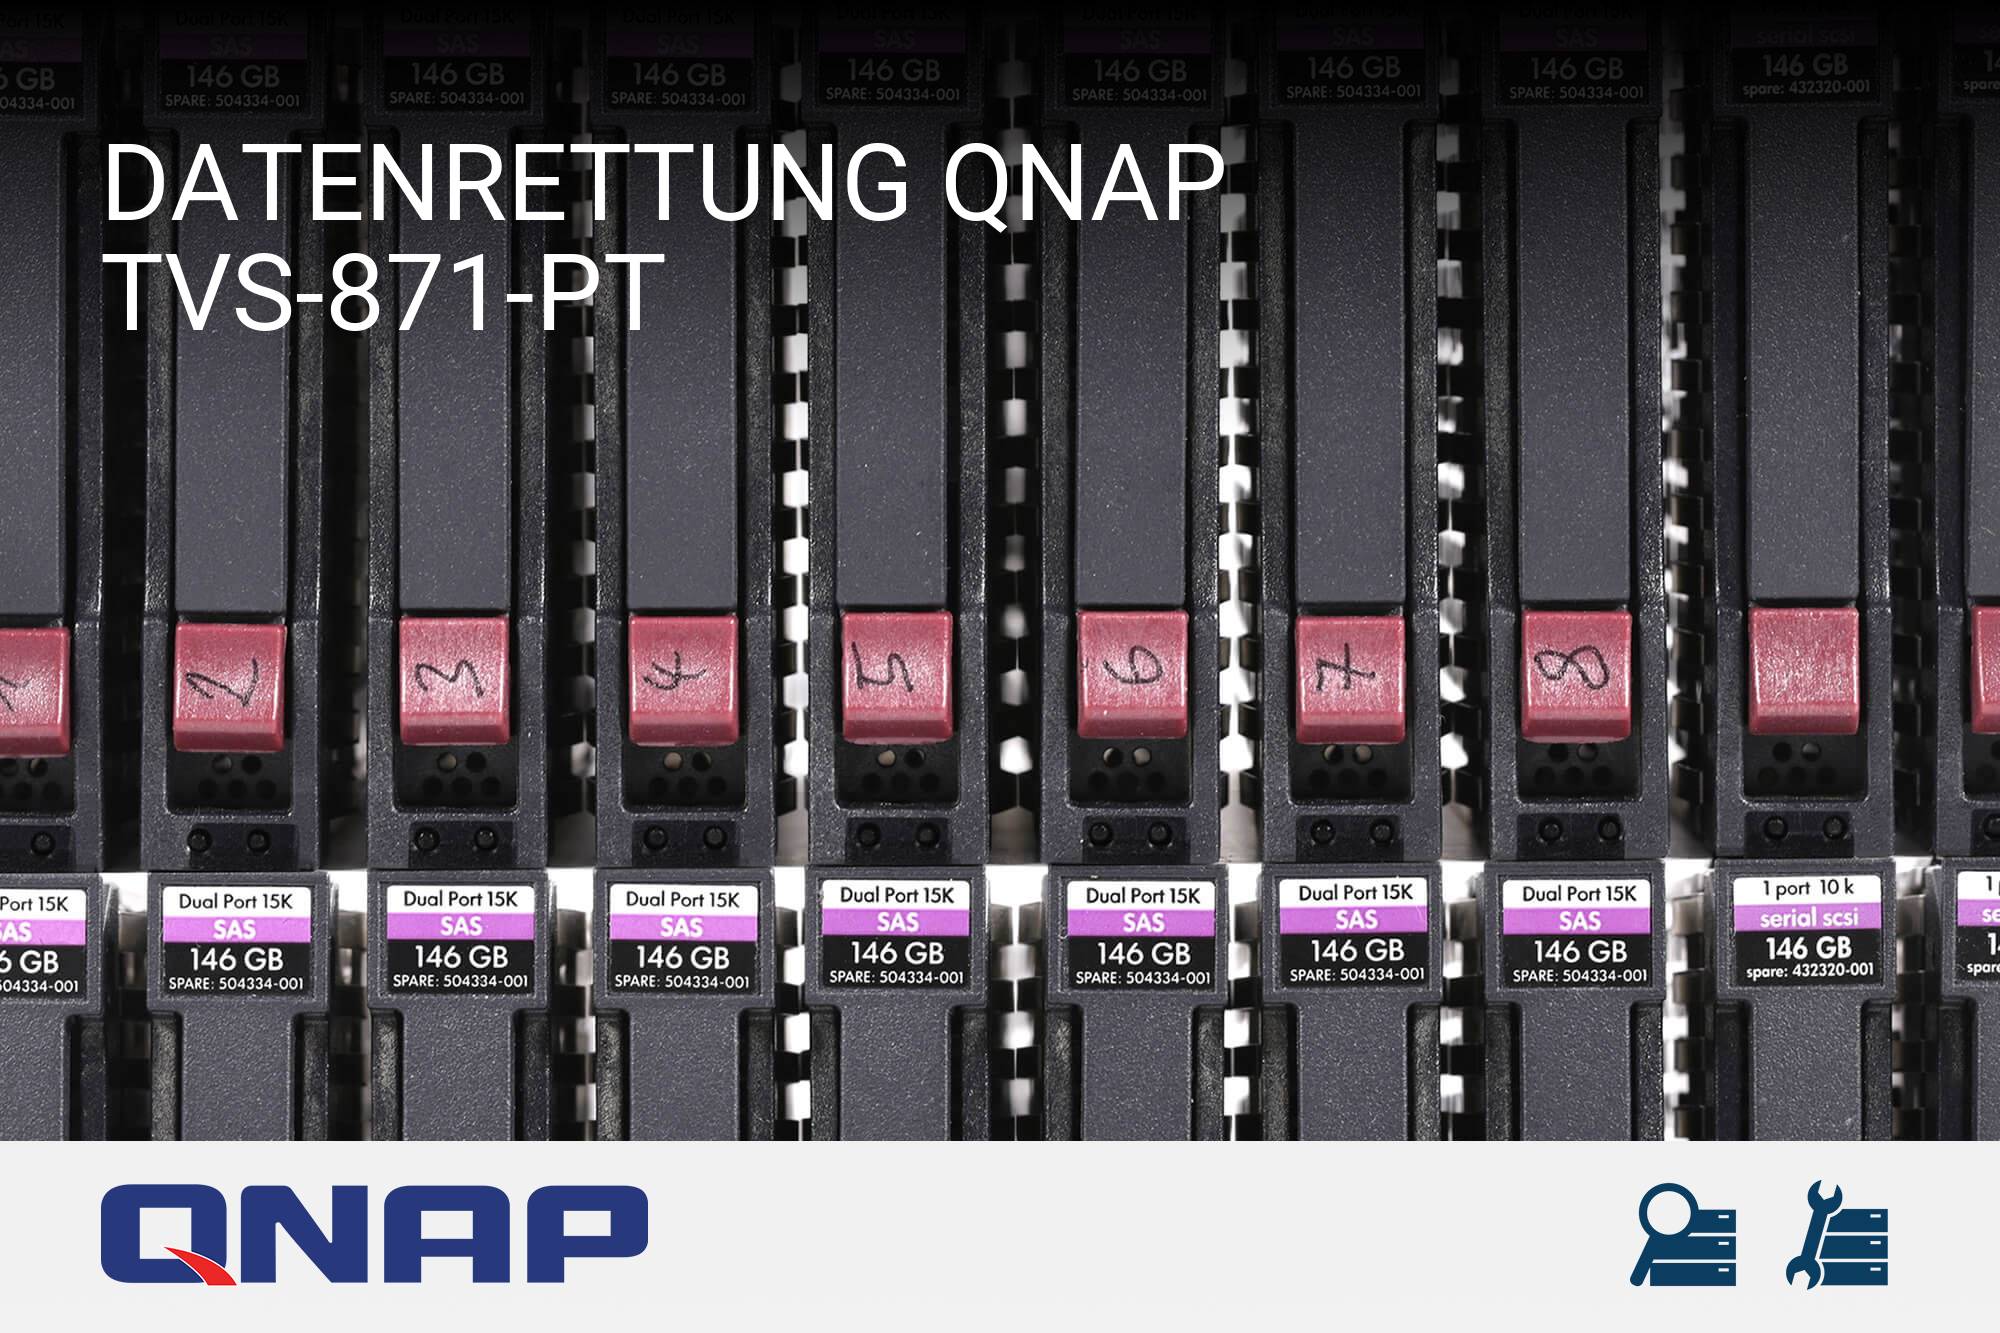 QNAP TVS-871-PT